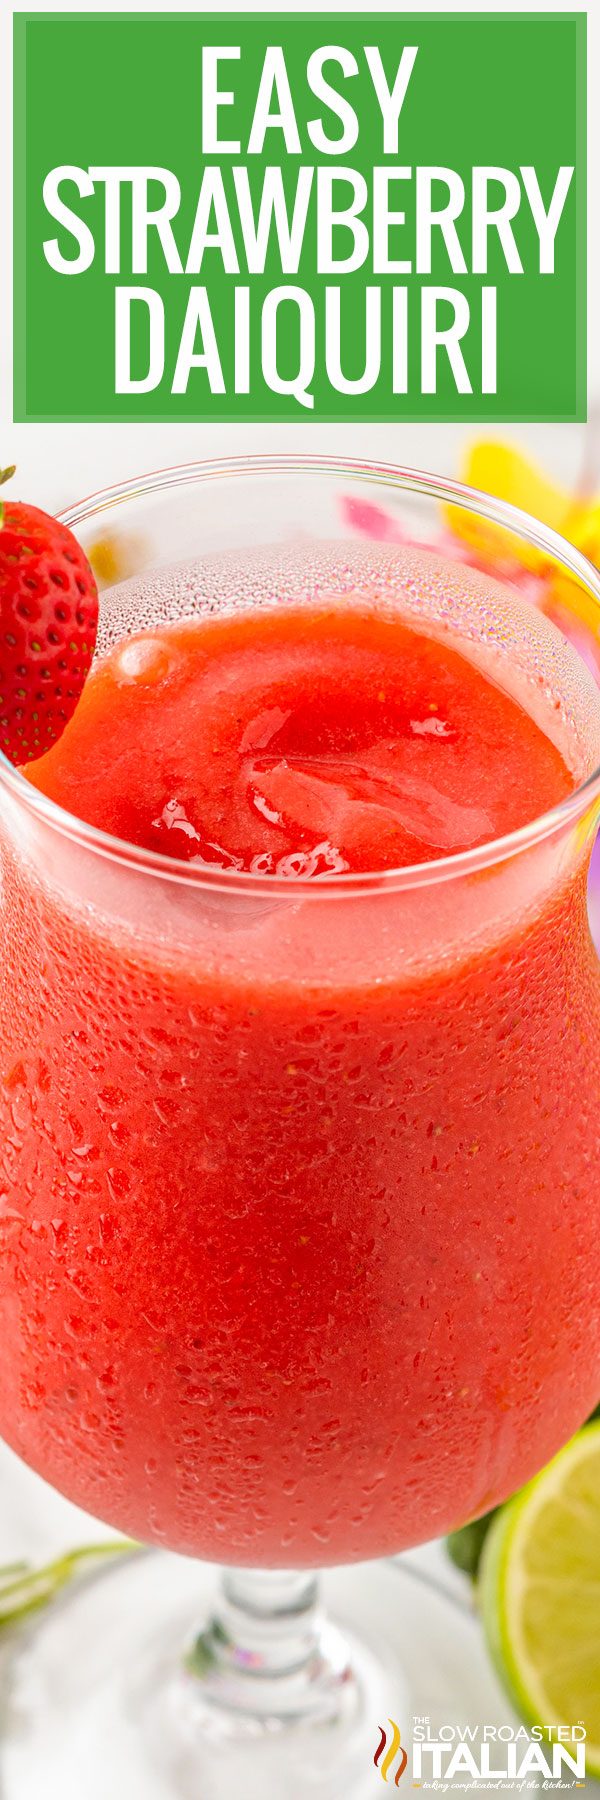 titled image for Strawberry Daiquiri recipe